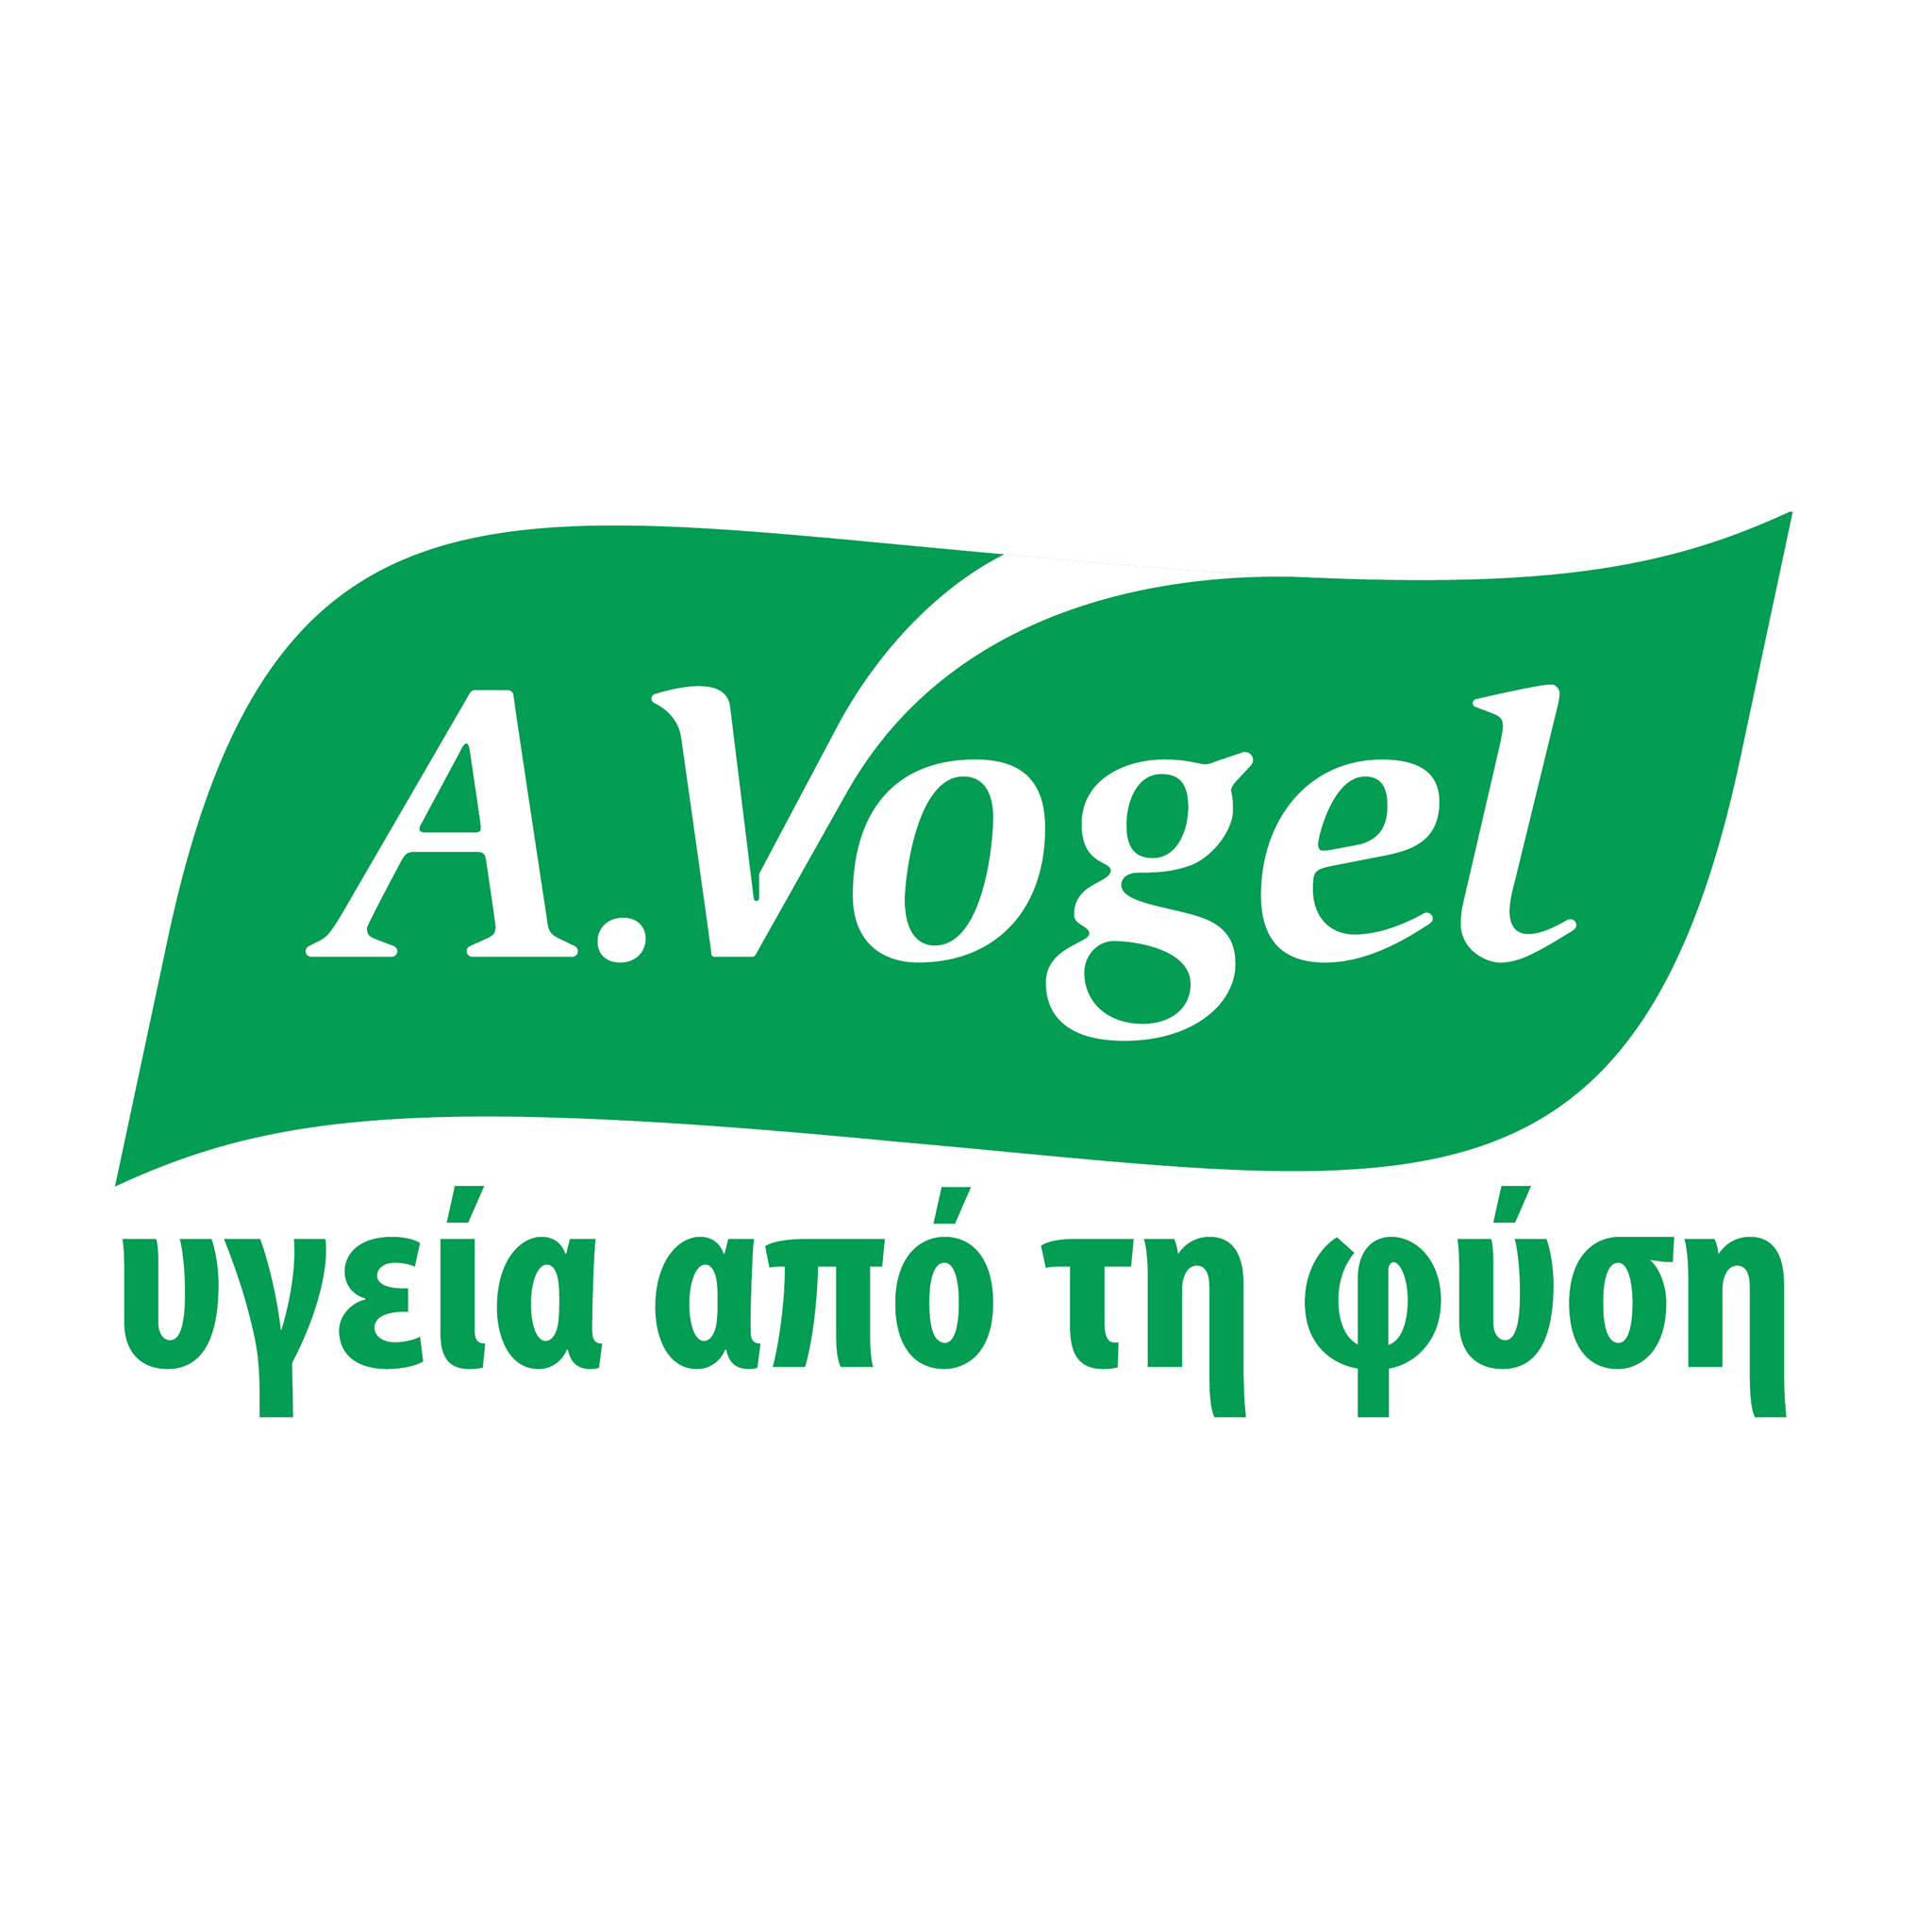 A.Vogel Passiflora Complex Tablets Nervous System Support 30 tabs